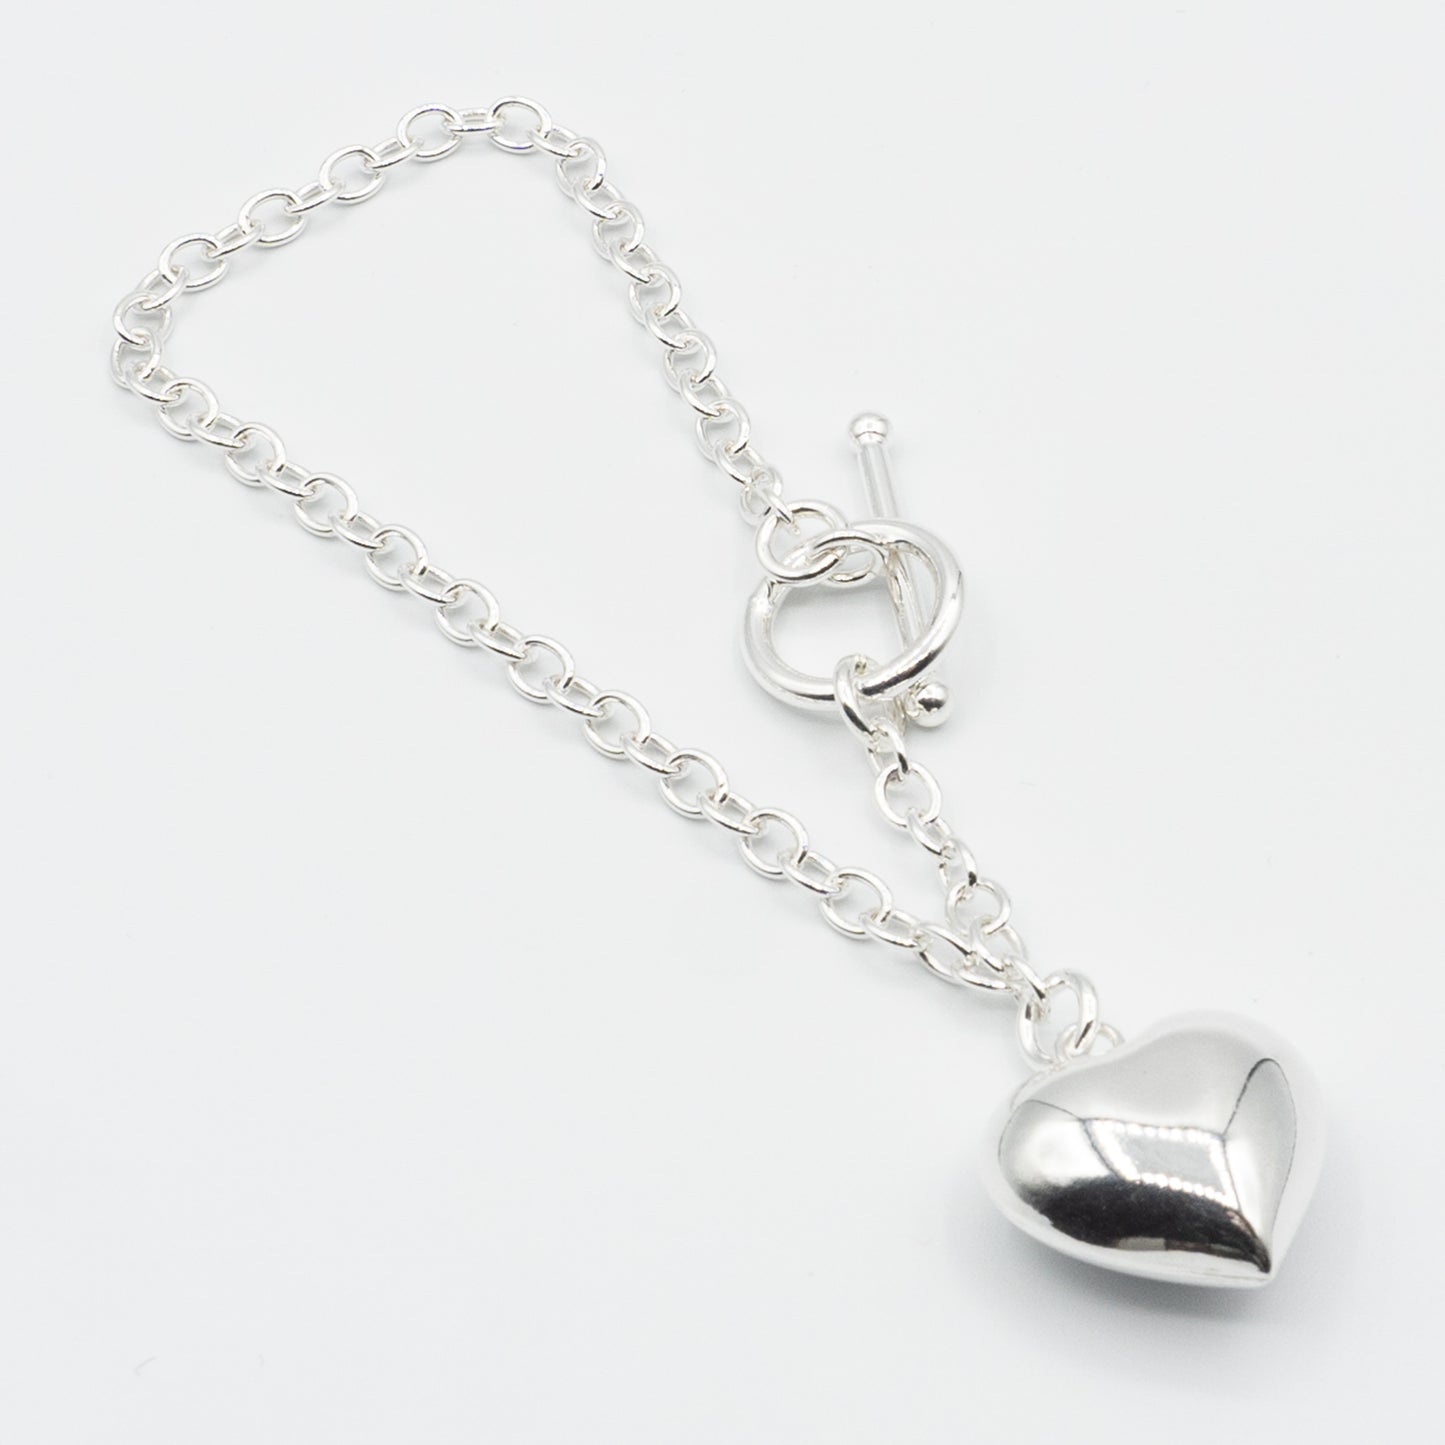 AVA - sterling silver bracelet with heart.